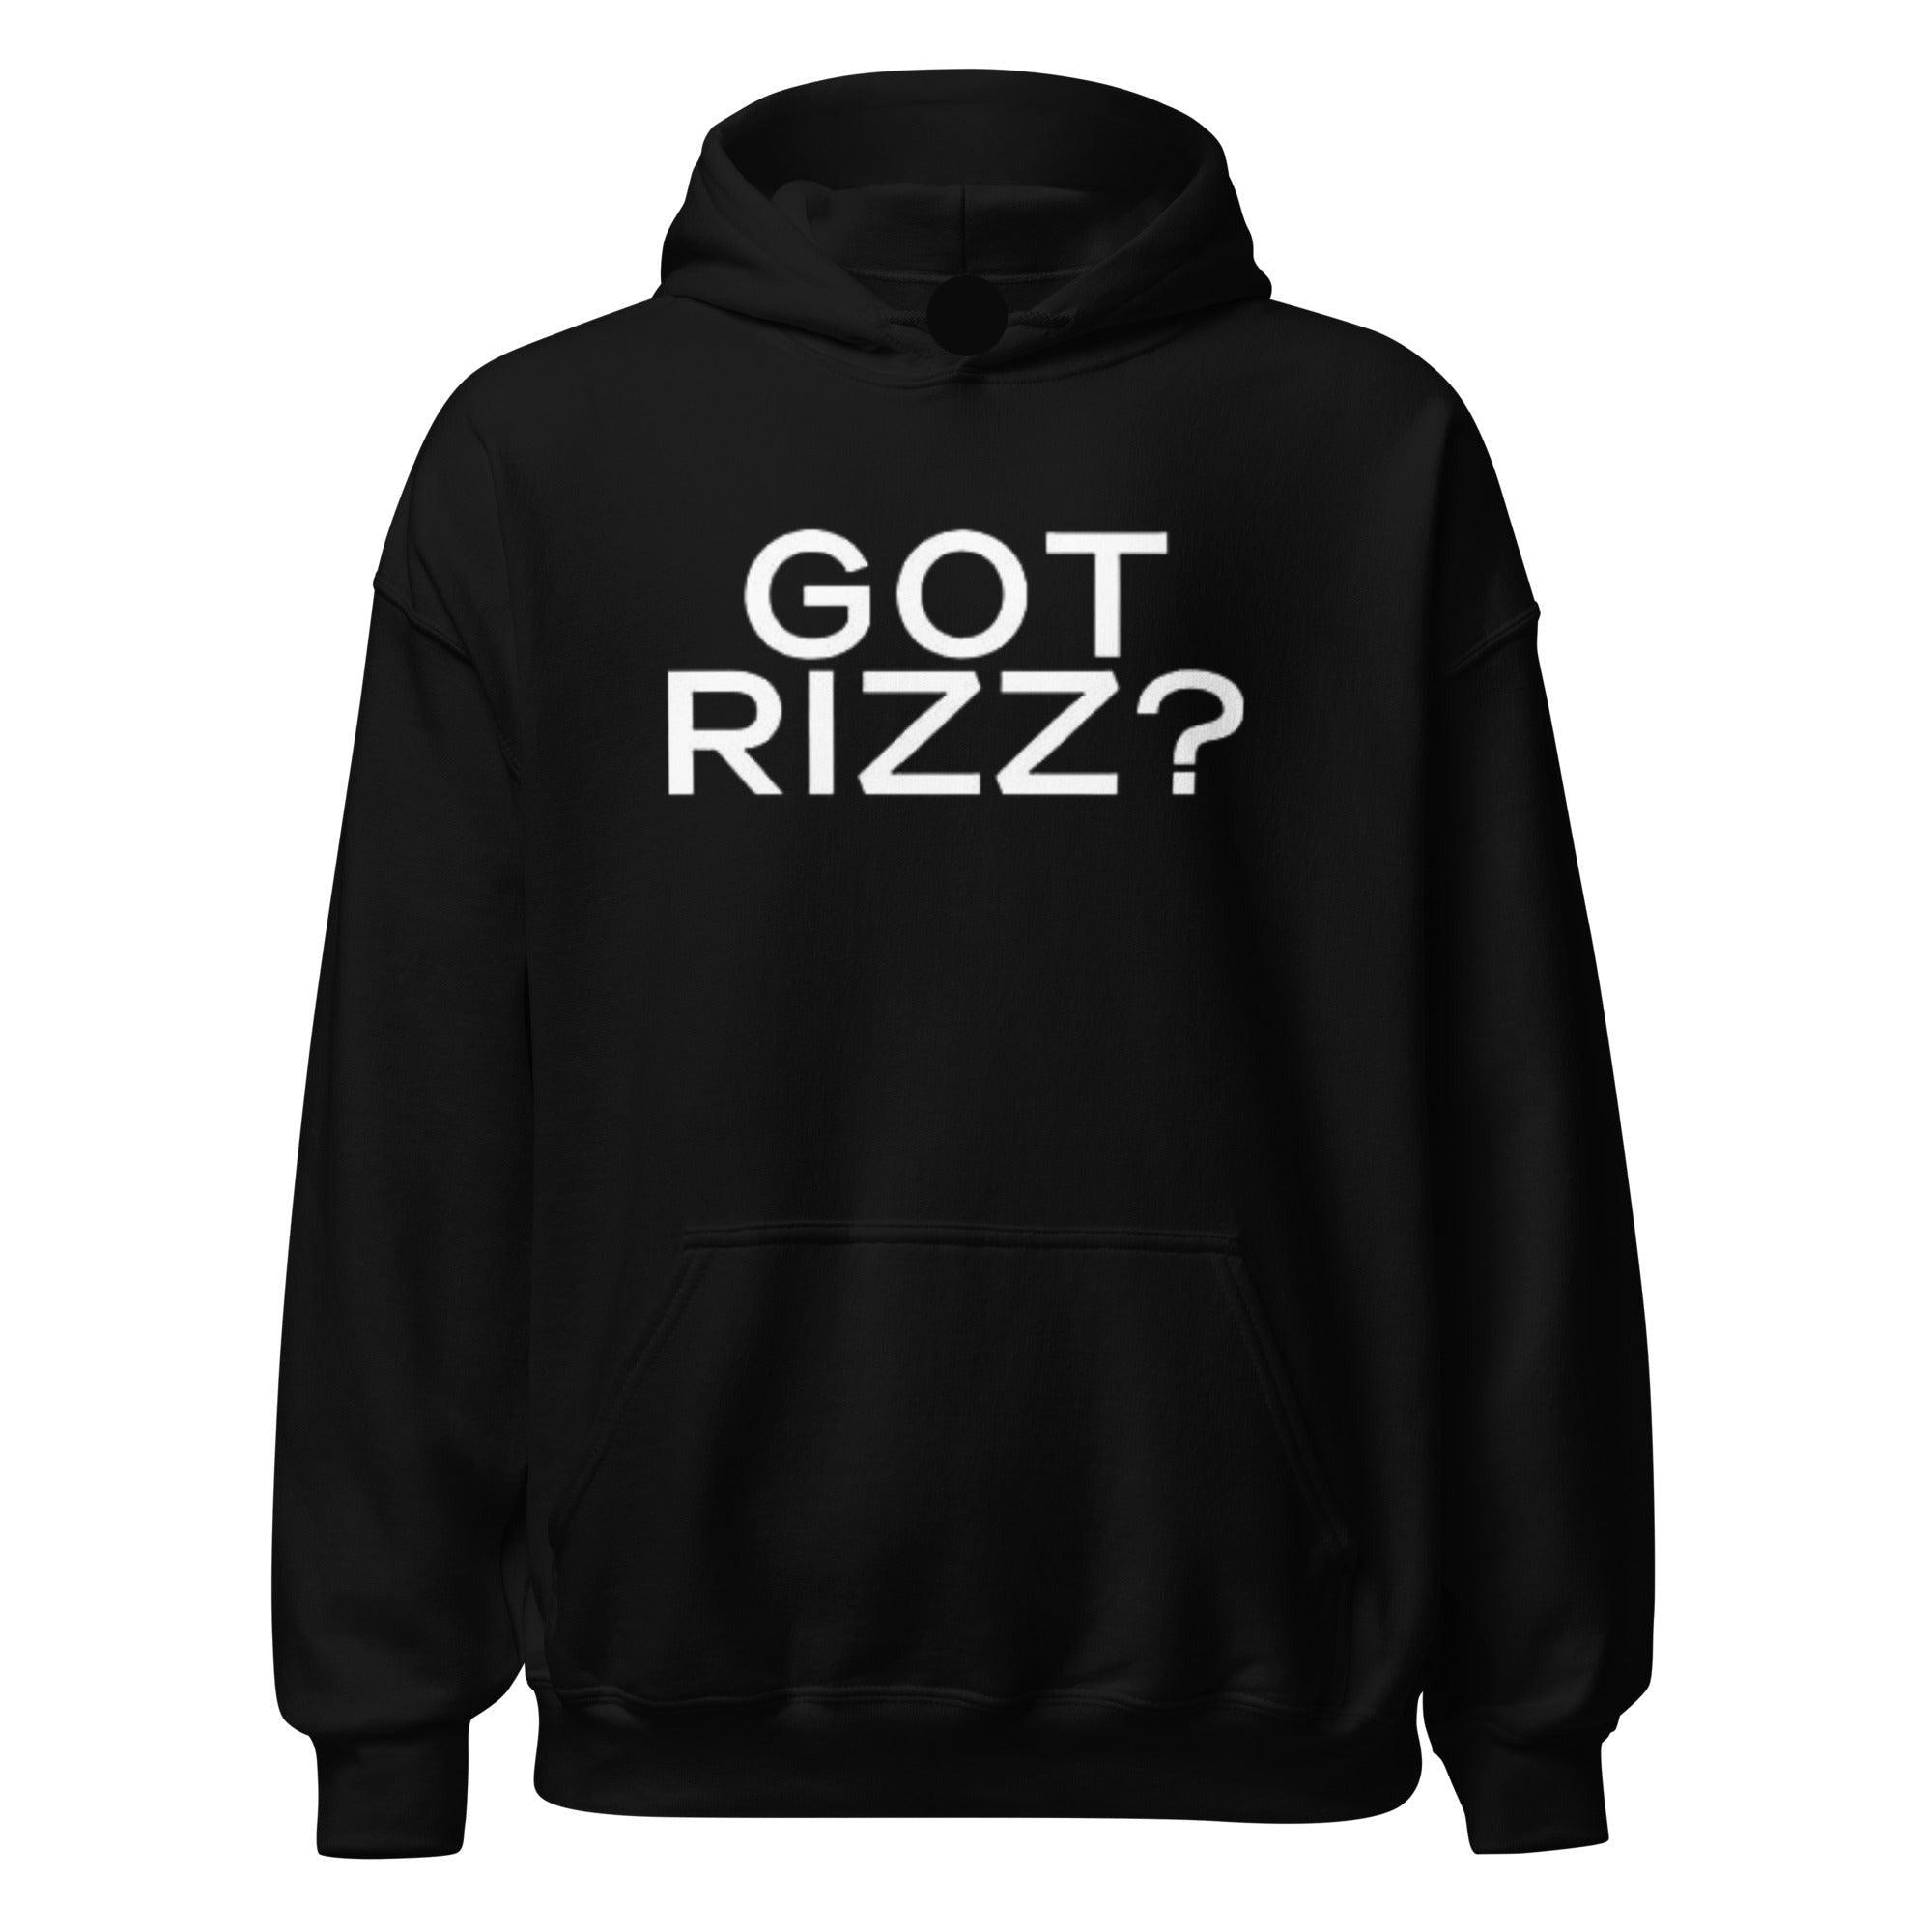 Funny Meme Hoodie Got Rizz? Midweight Ultra Soft Blended Cotton Pullover - TopKoalaTee